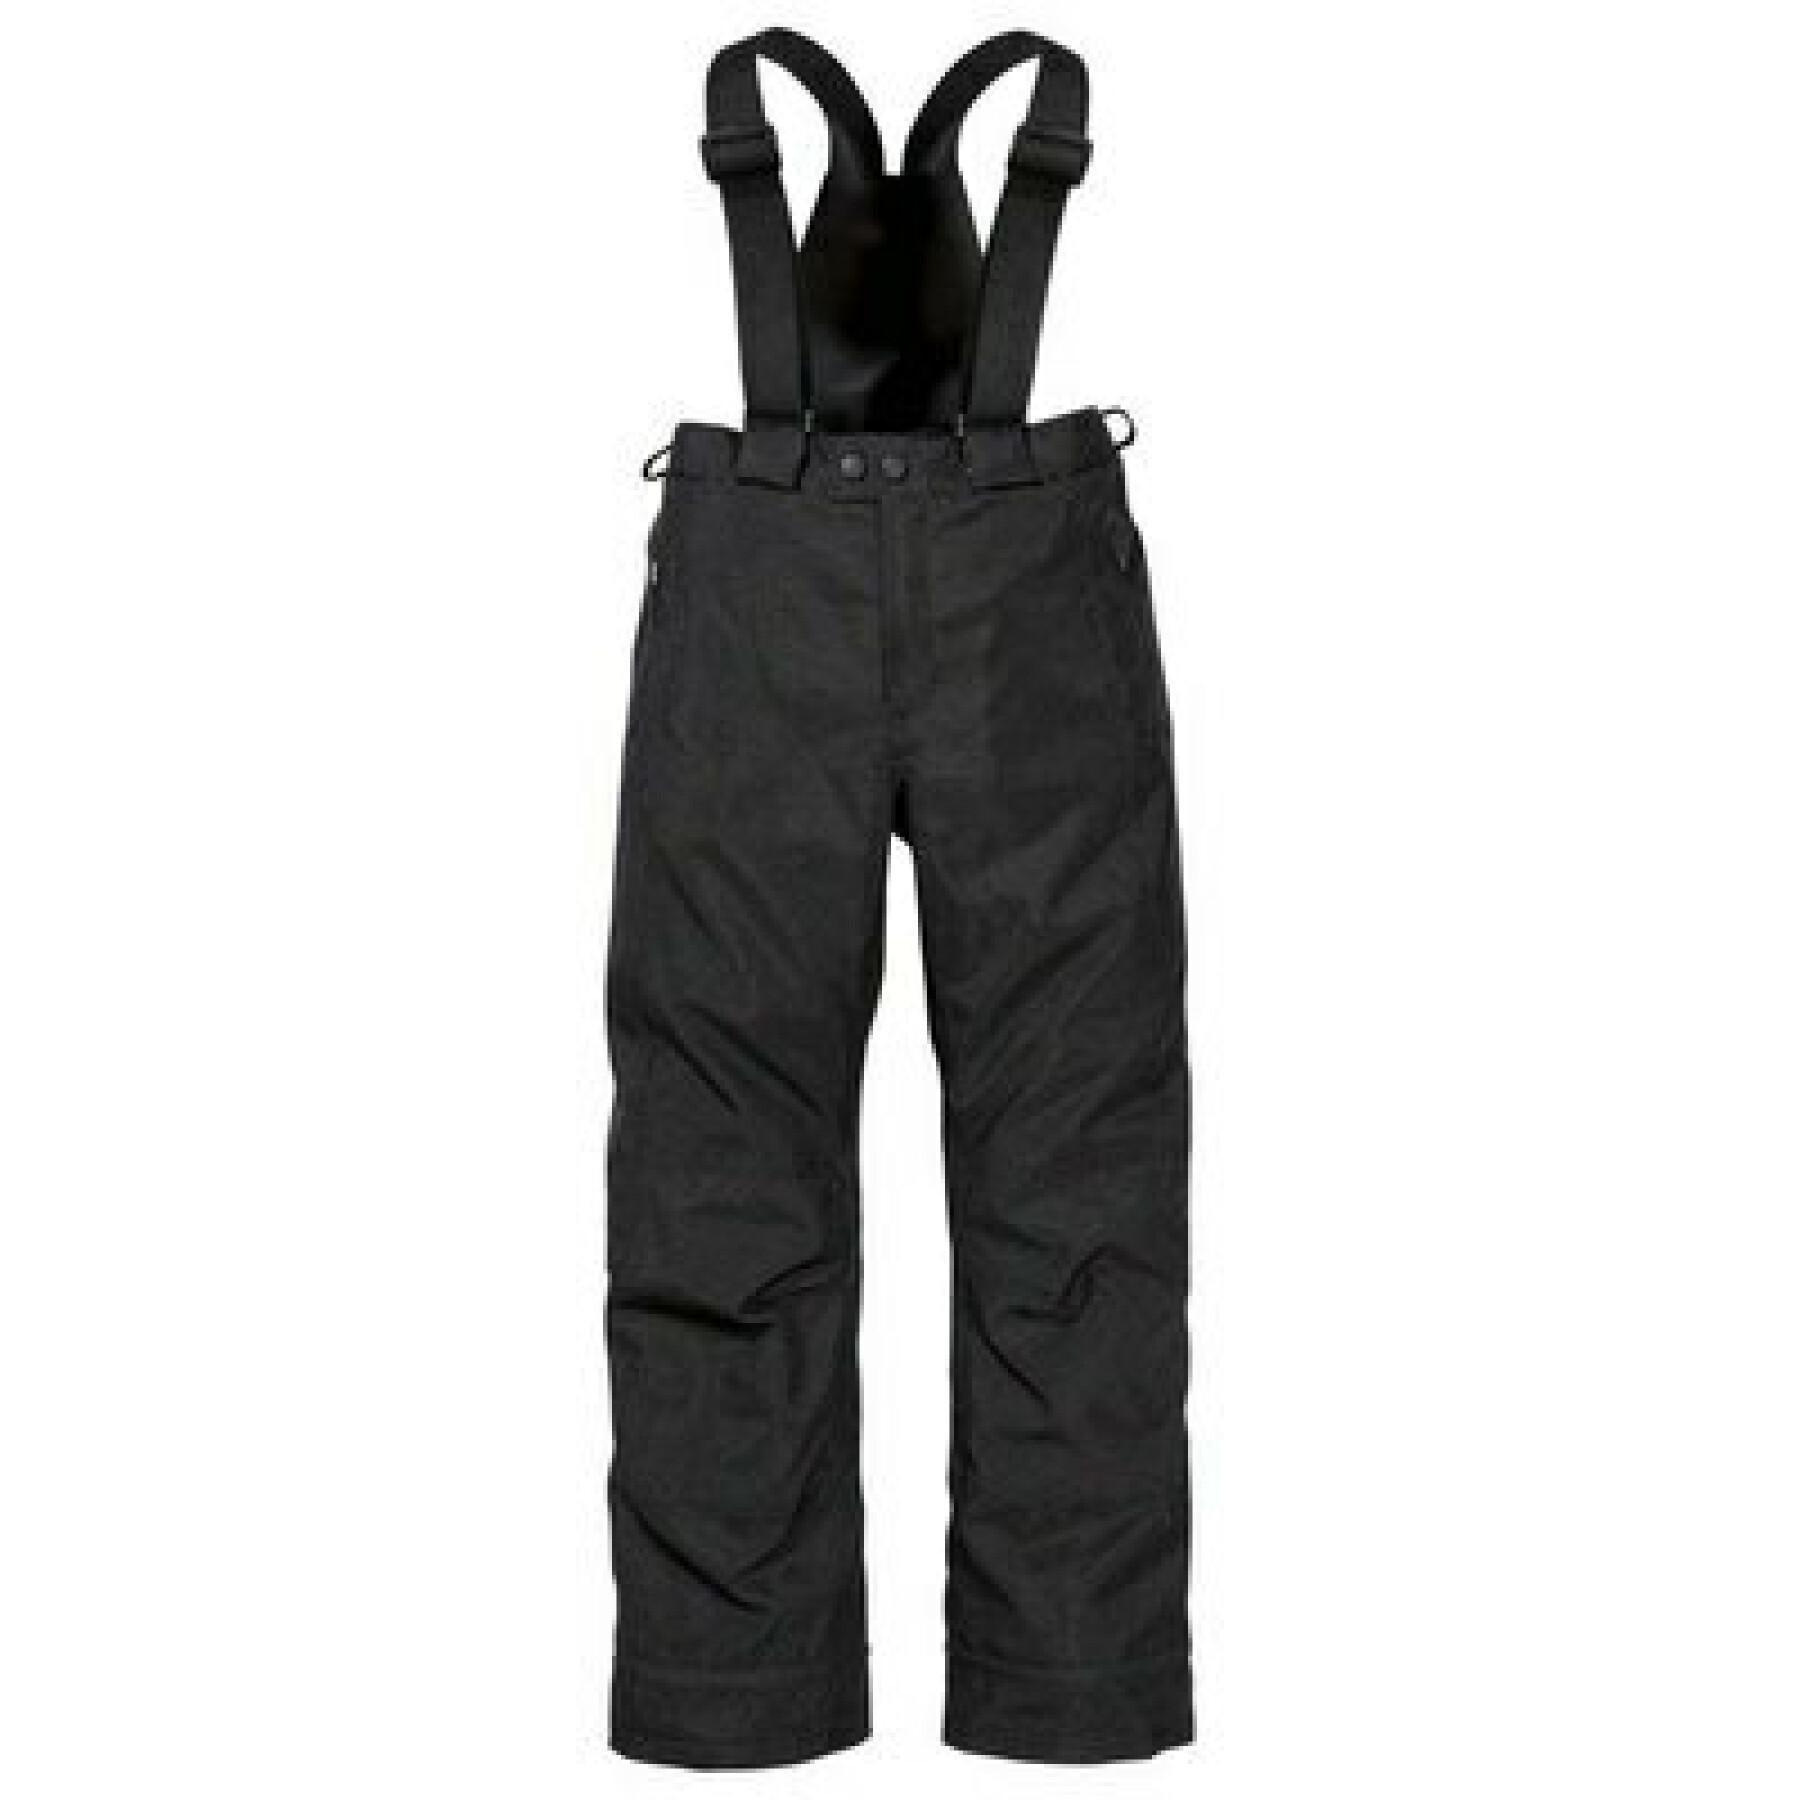 Motorcycle pants for children Difi skywalker